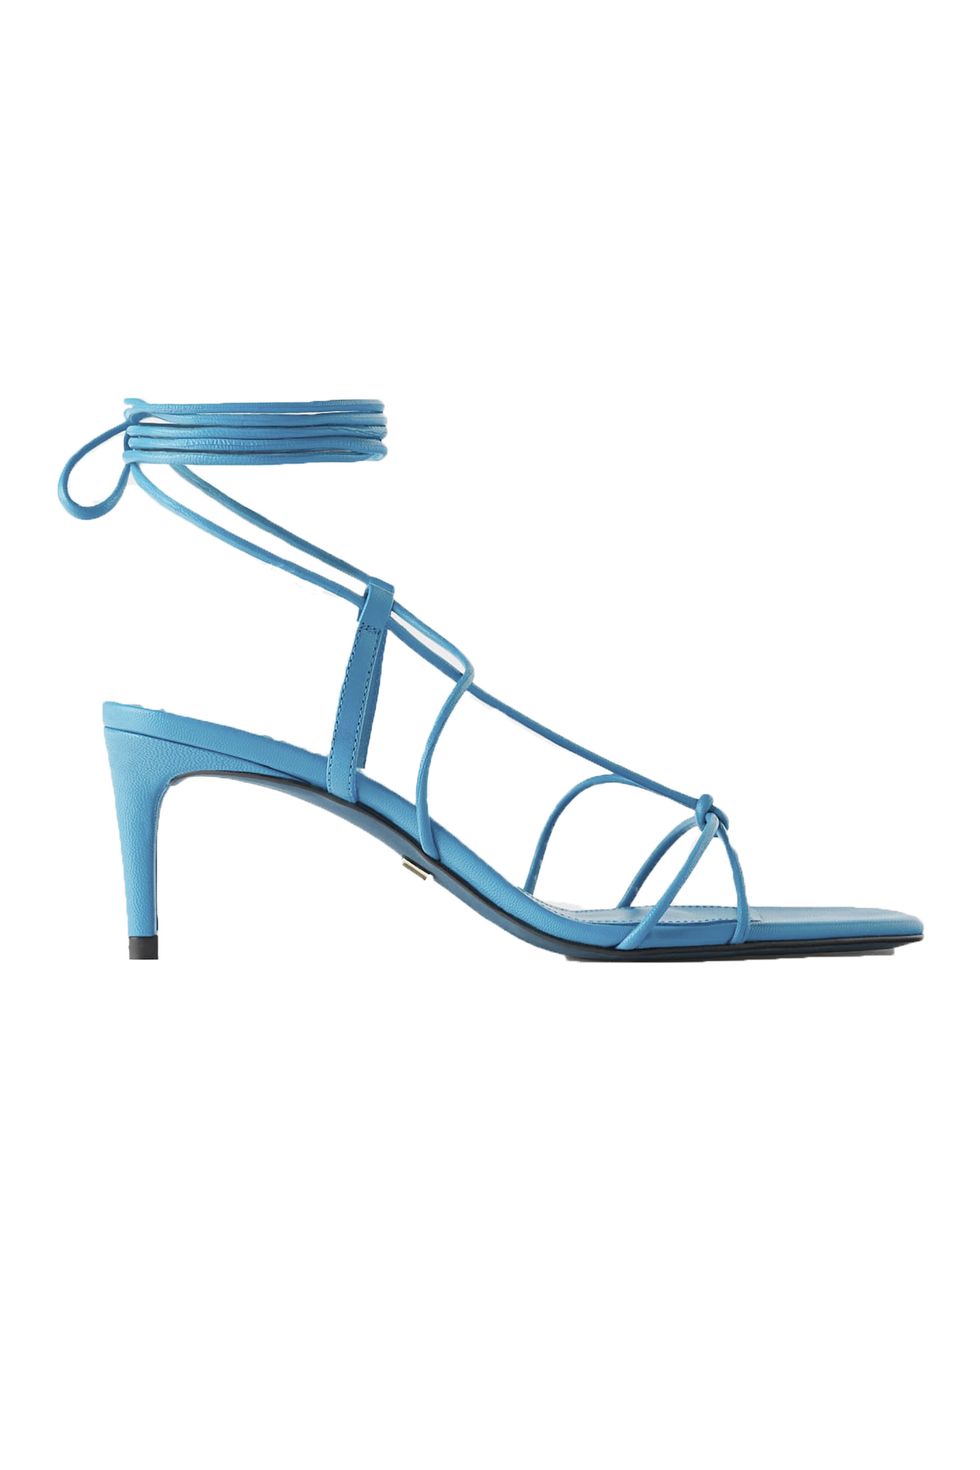 Footwear, Sandal, Slingback, Turquoise, Blue, Shoe, High heels, Electric blue, Bridal shoe, Turquoise, 